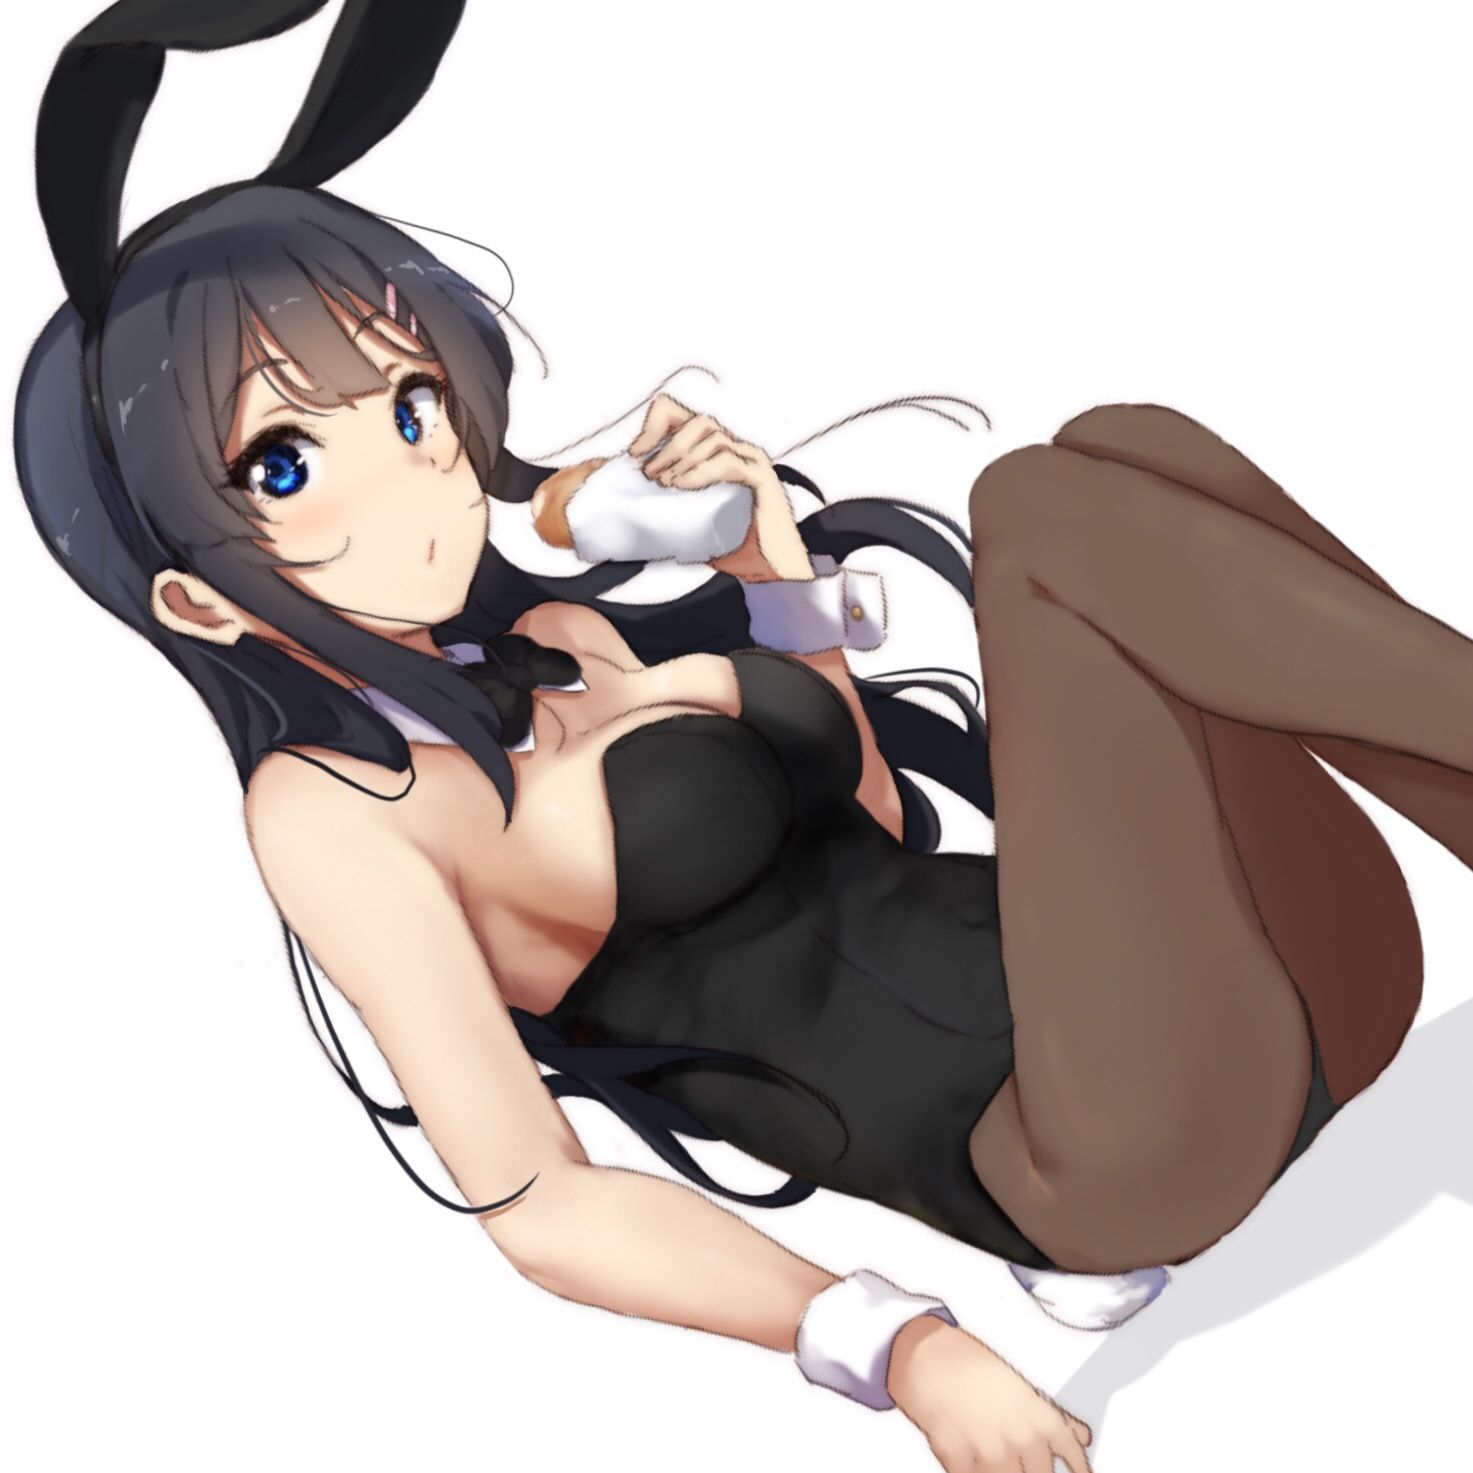 [Secondary/ZIP] Wild bunny girl mai sakurajima cute picture of the seniors "youth Pig does not dream of a senior Bunny girl" 27